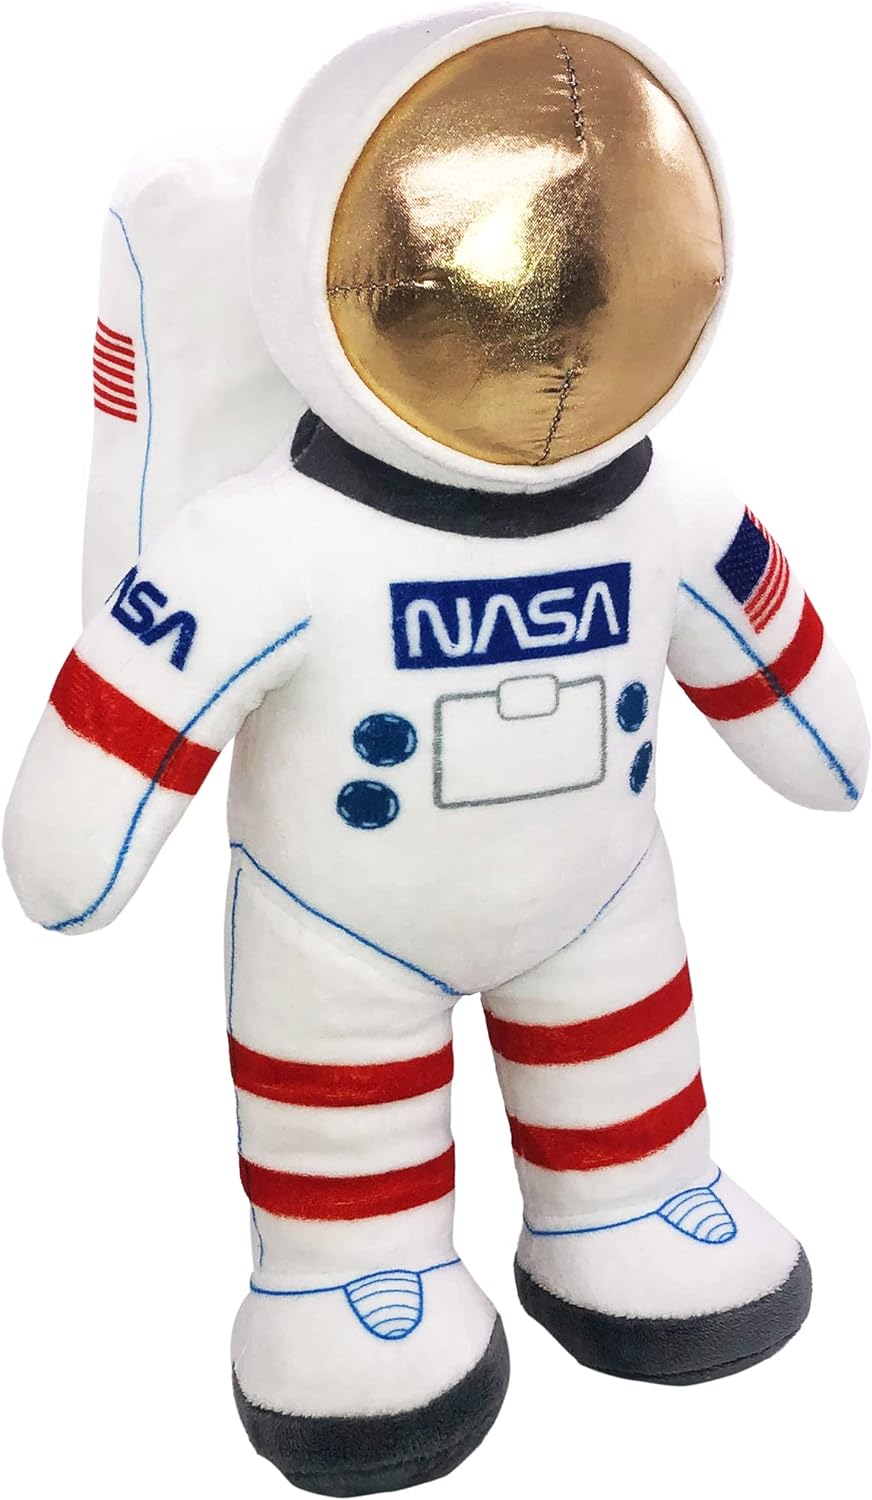 12” Plush Toy Astronaut Figurine, Realistic Astronaut Plush Toy with NASA & USA Flag Arm Patches, Super-Soft Stuffed, Space Decor Astronaut Toys for Kids 3-5, NASA Toys, Toddler Birthday Gift